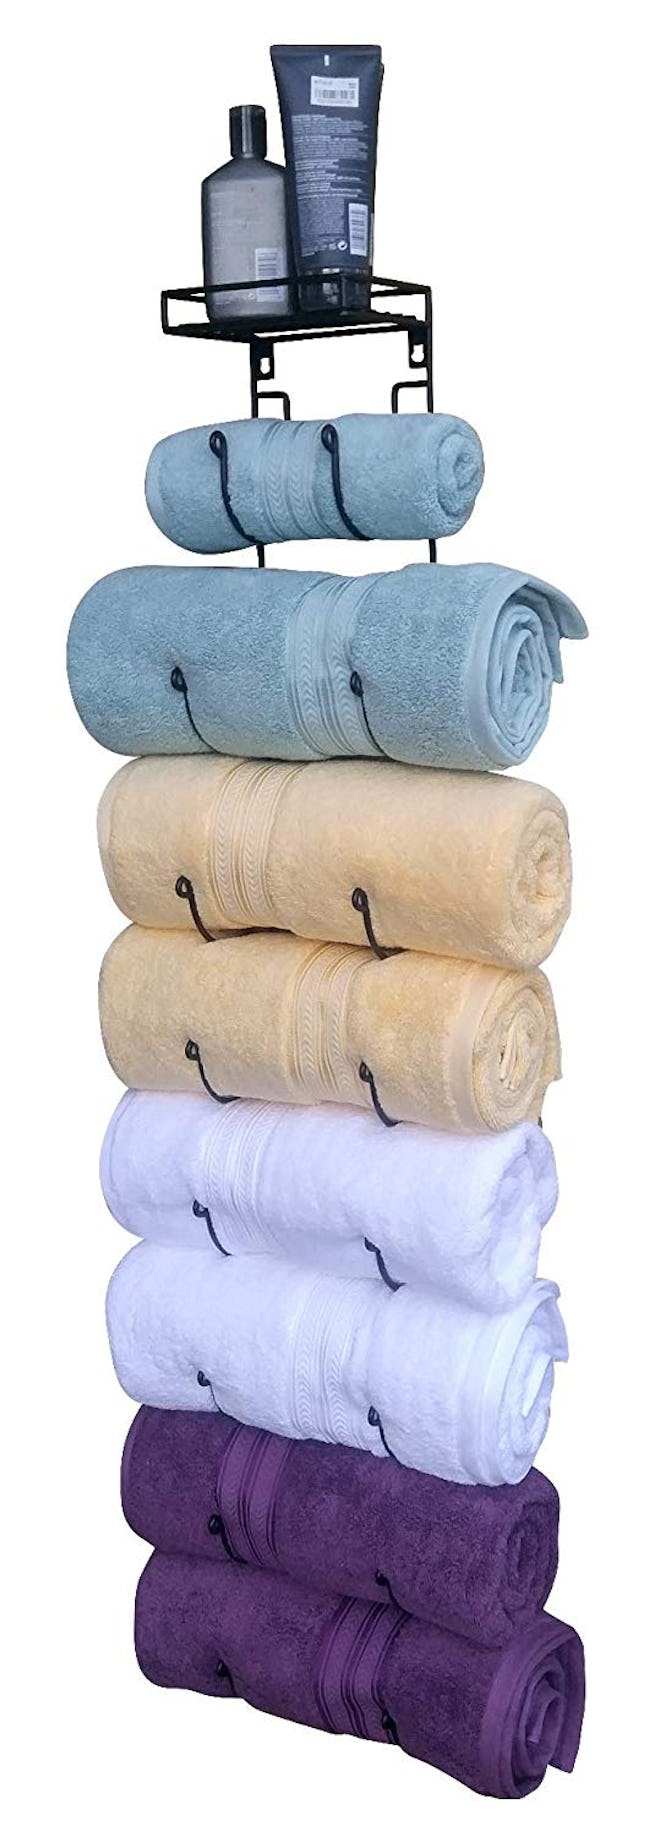 Premium Presents Bath Towel Rack